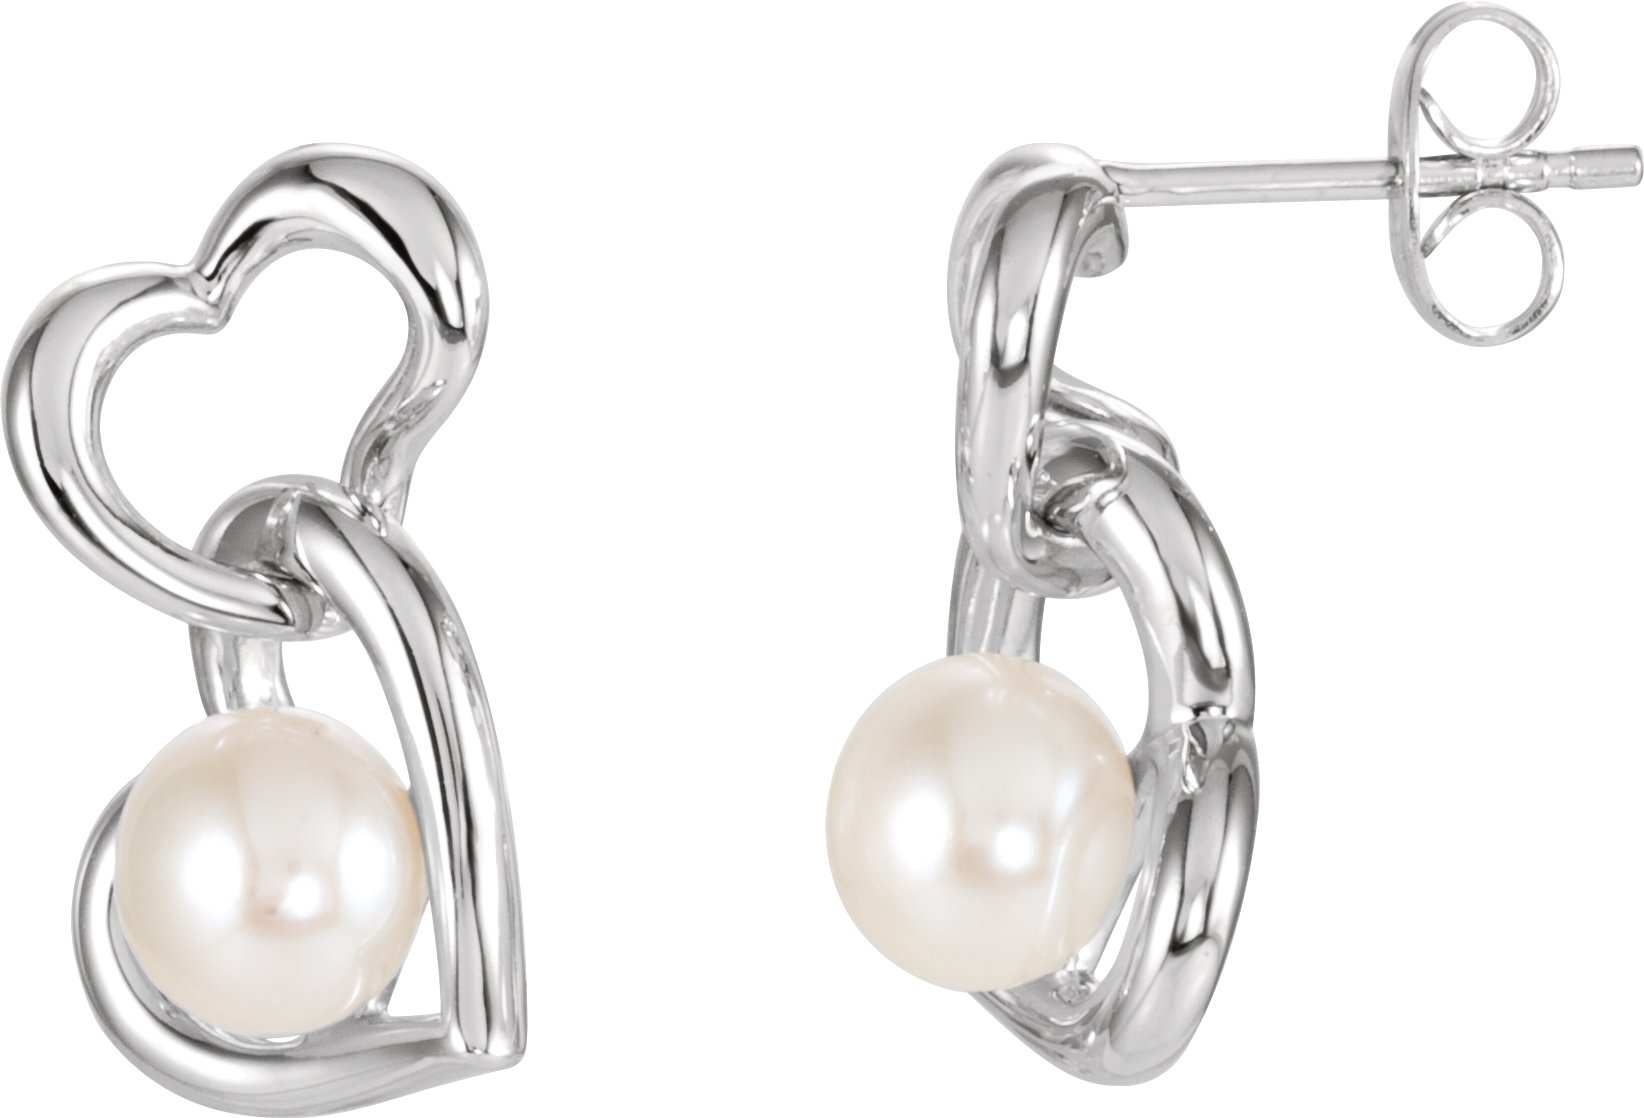 Sterling Silver Freshwater Cultured Pearl Double Heart Earrings